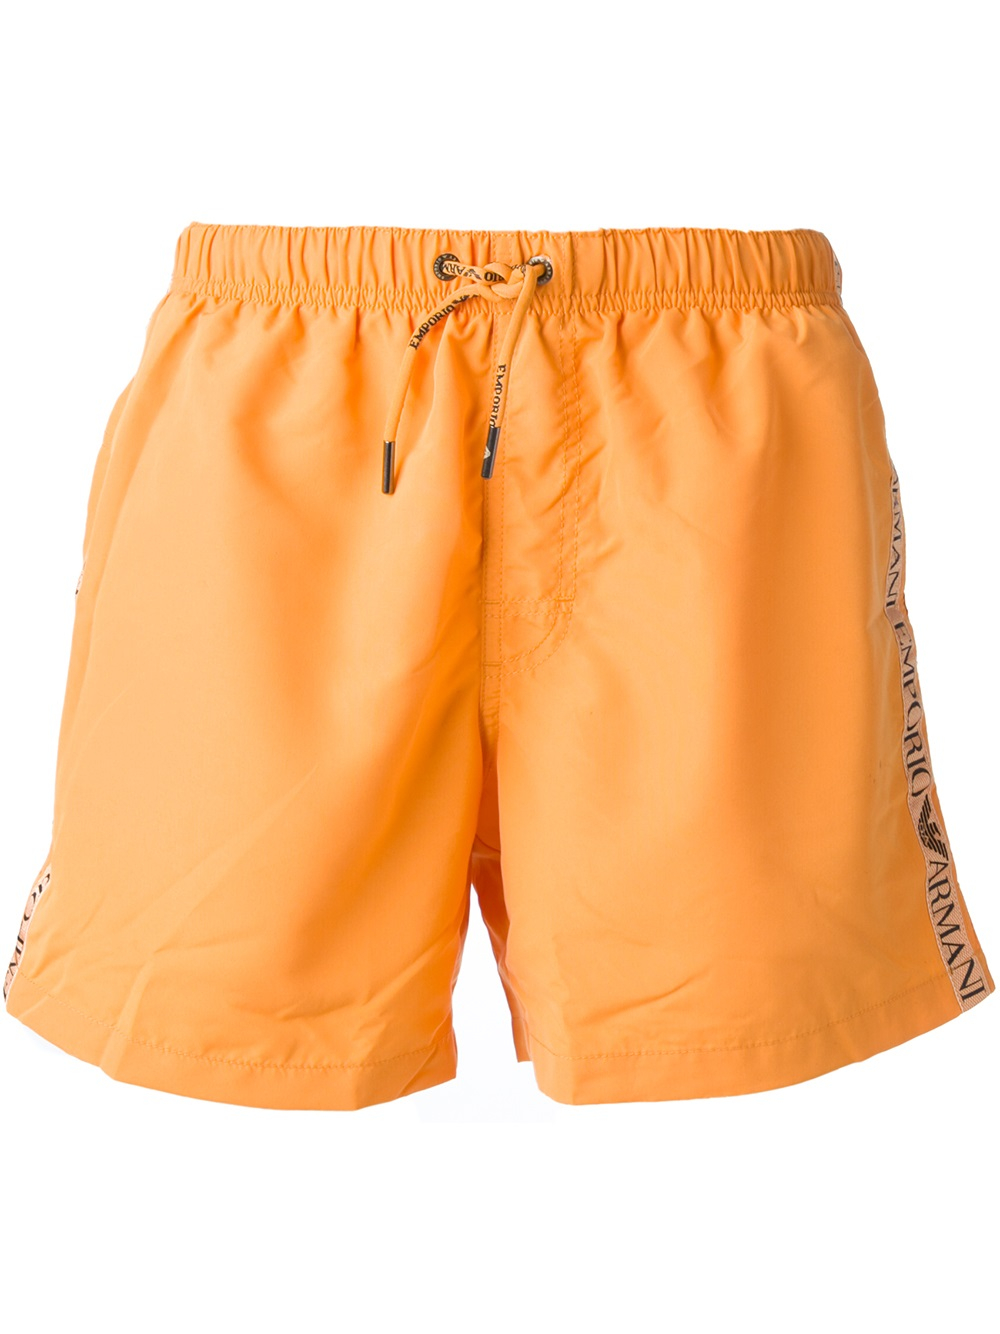 Lyst - Emporio Armani Logo-Stripe Swim Shorts in Orange for Men